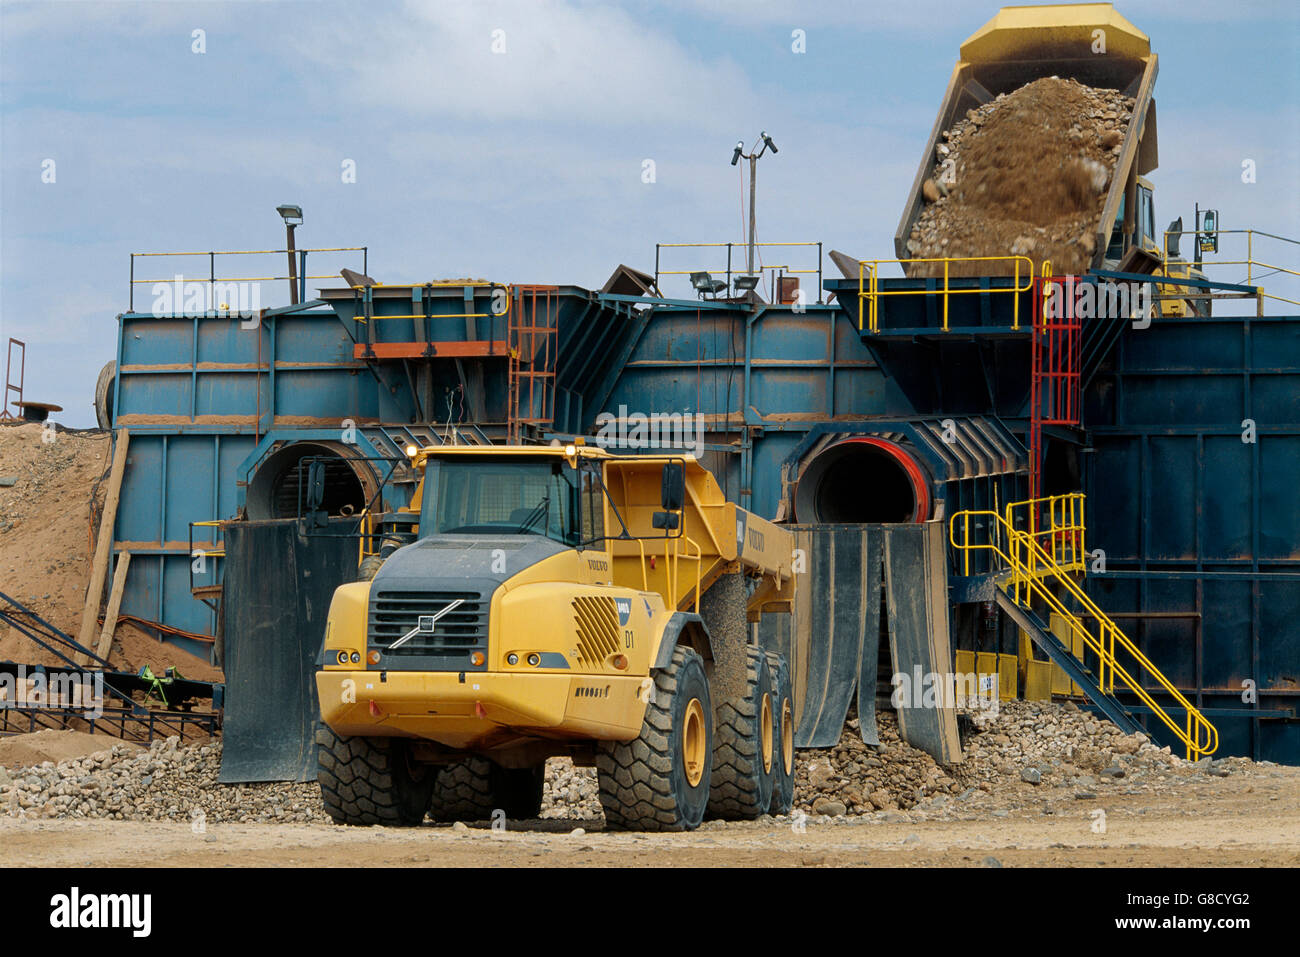 Douglas mine, South Africa. Stock Photo